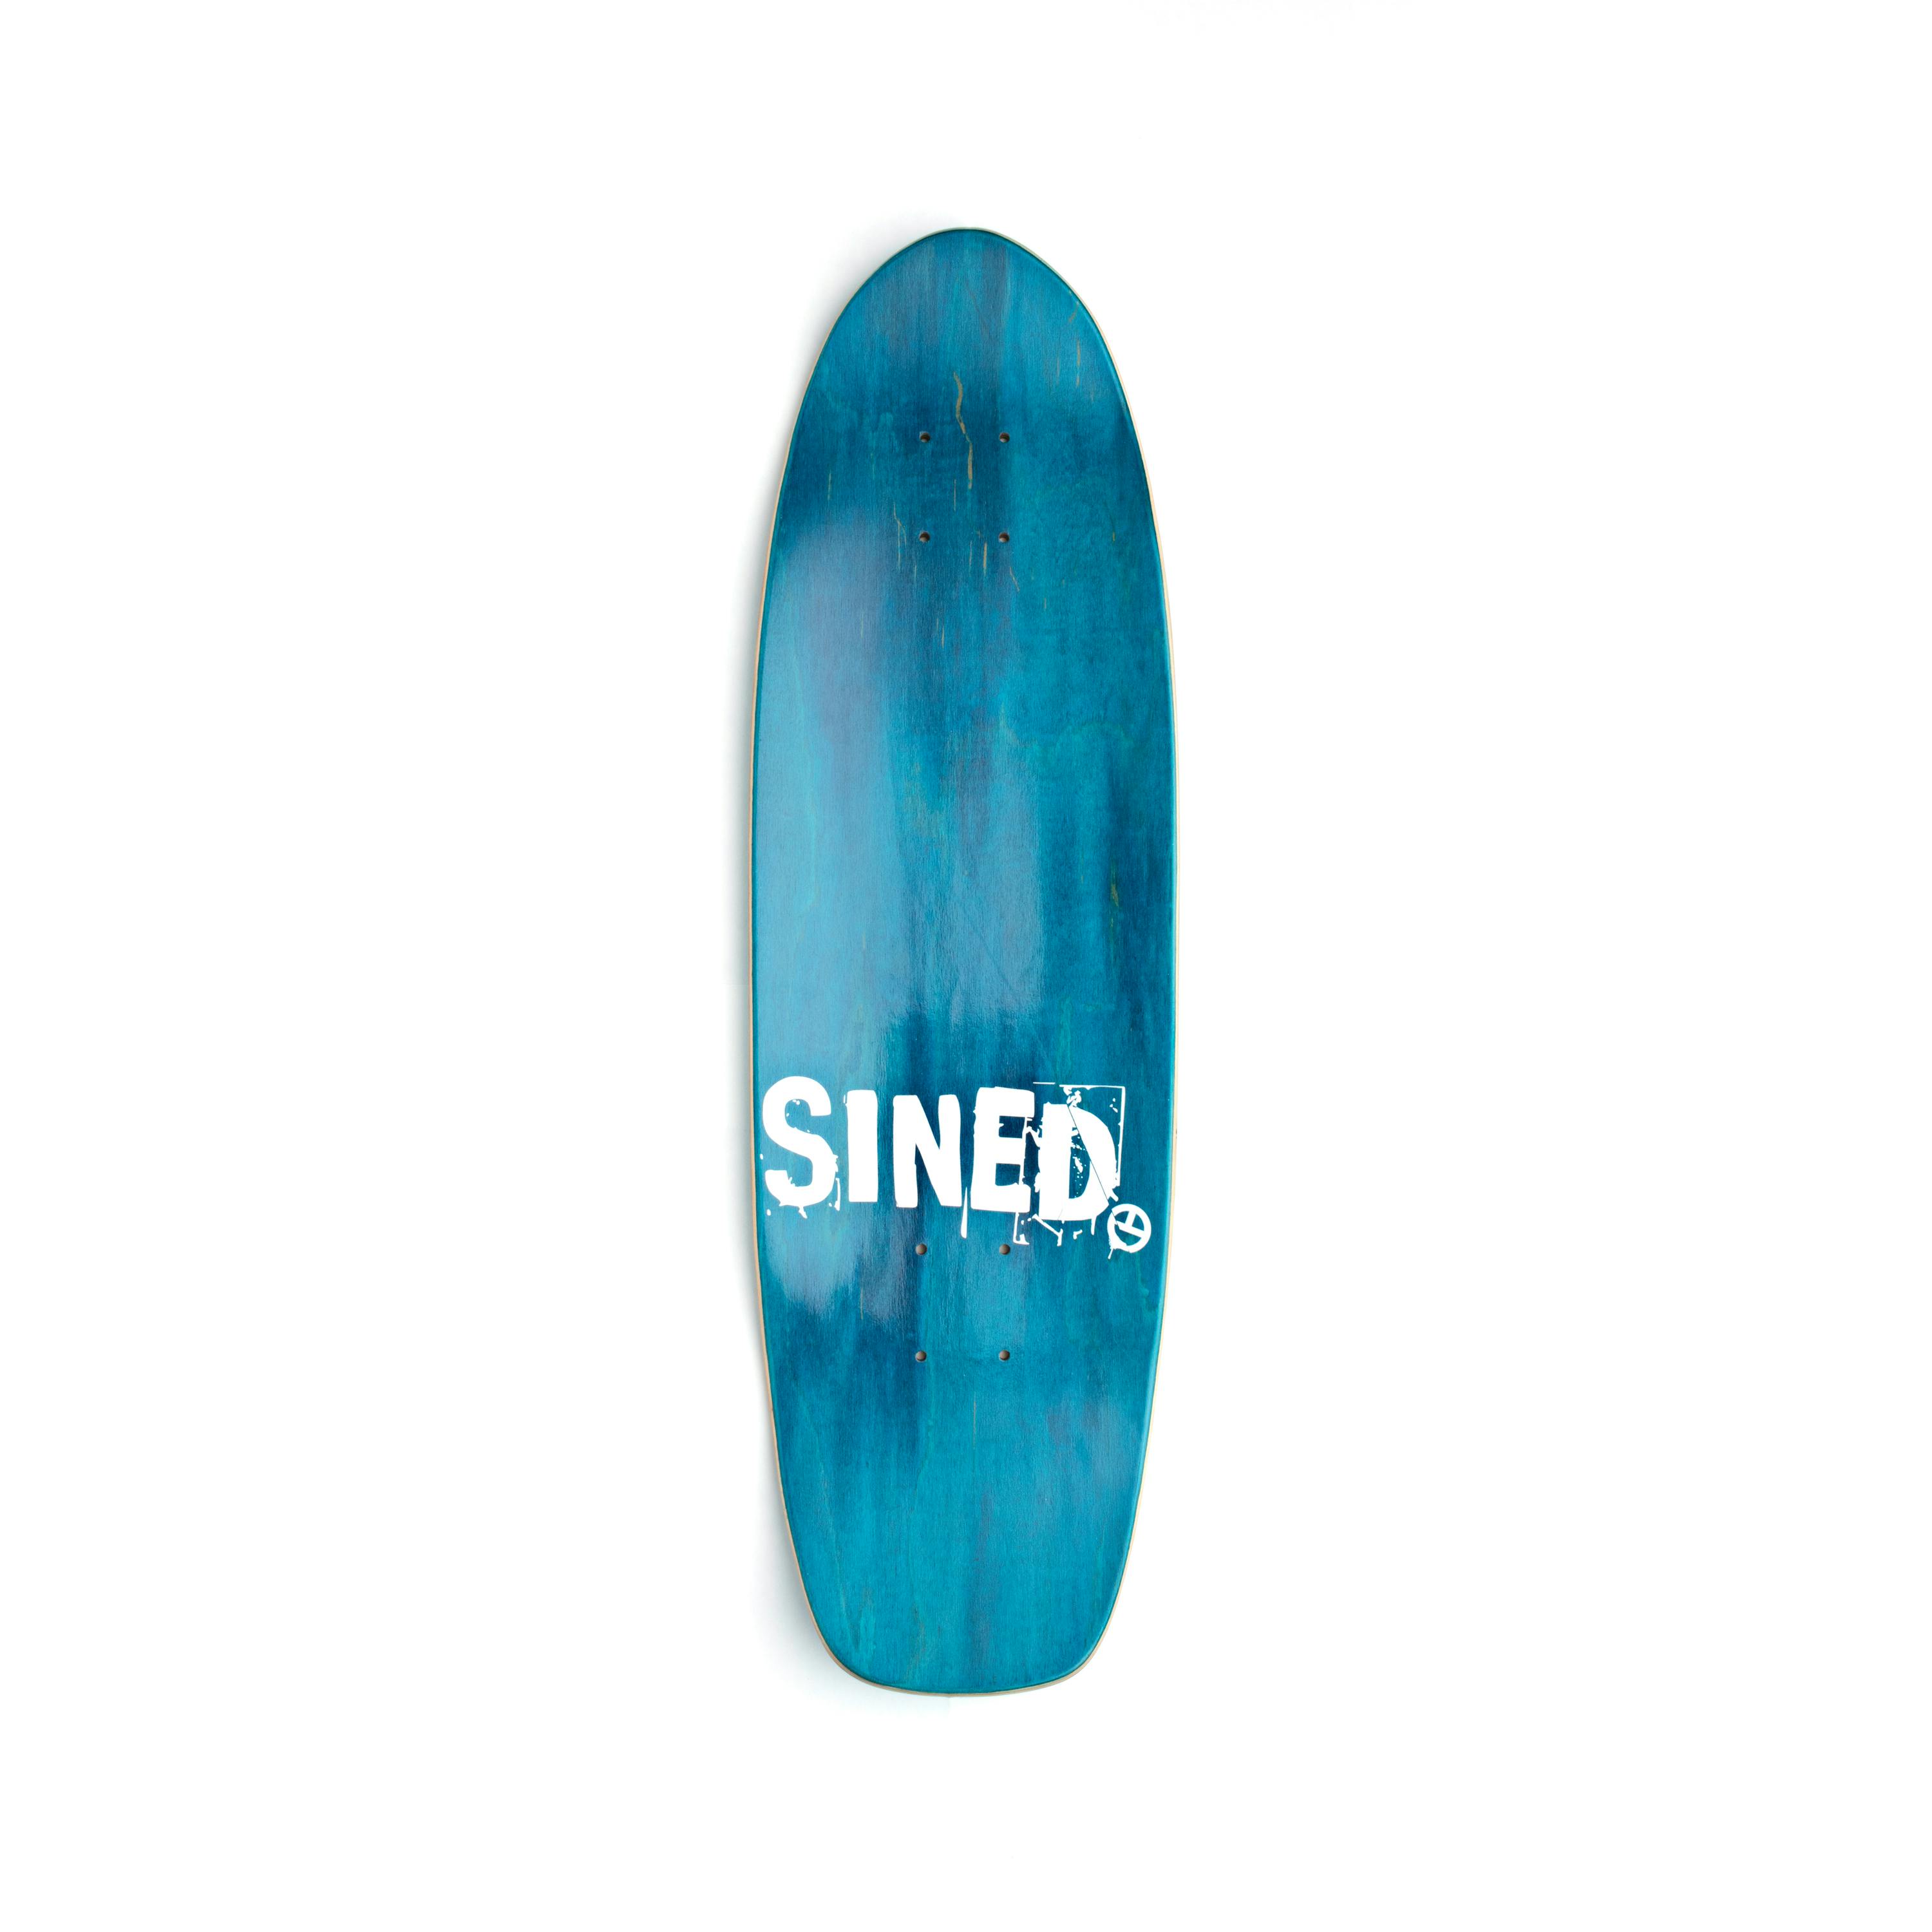 Sined Skateboards